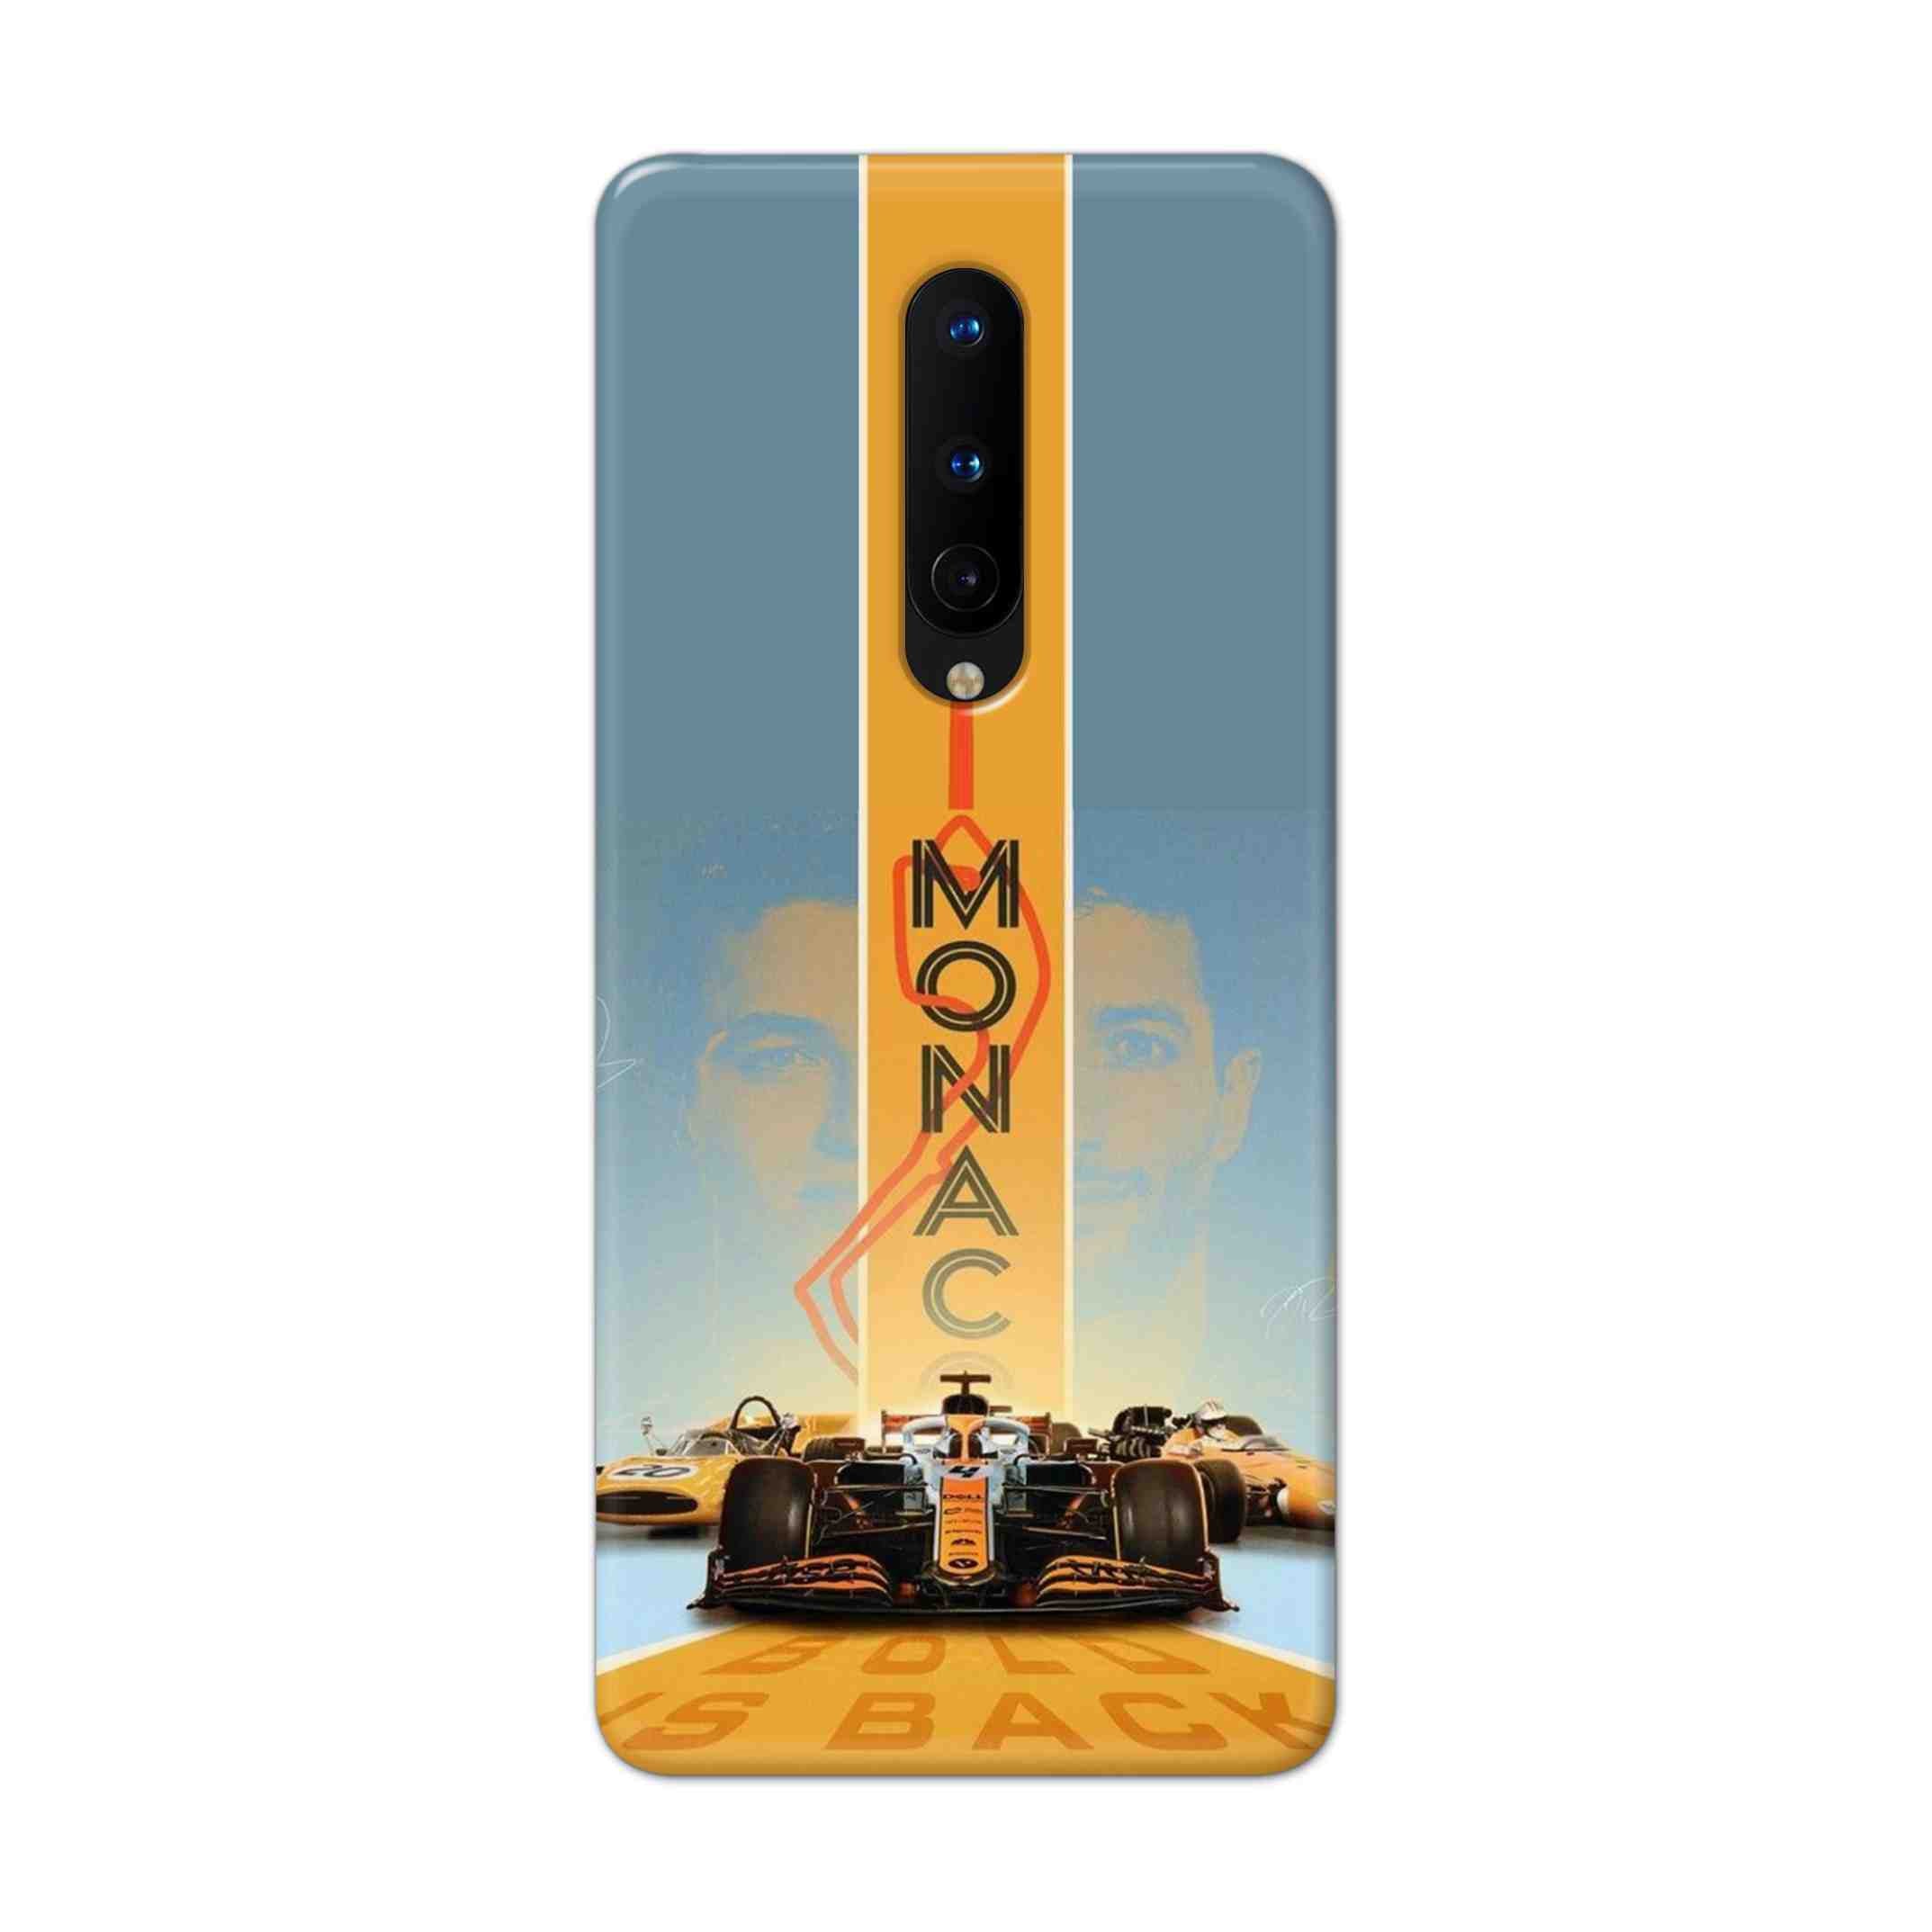 Buy Monac Formula Hard Back Mobile Phone Case Cover For OnePlus 8 Online